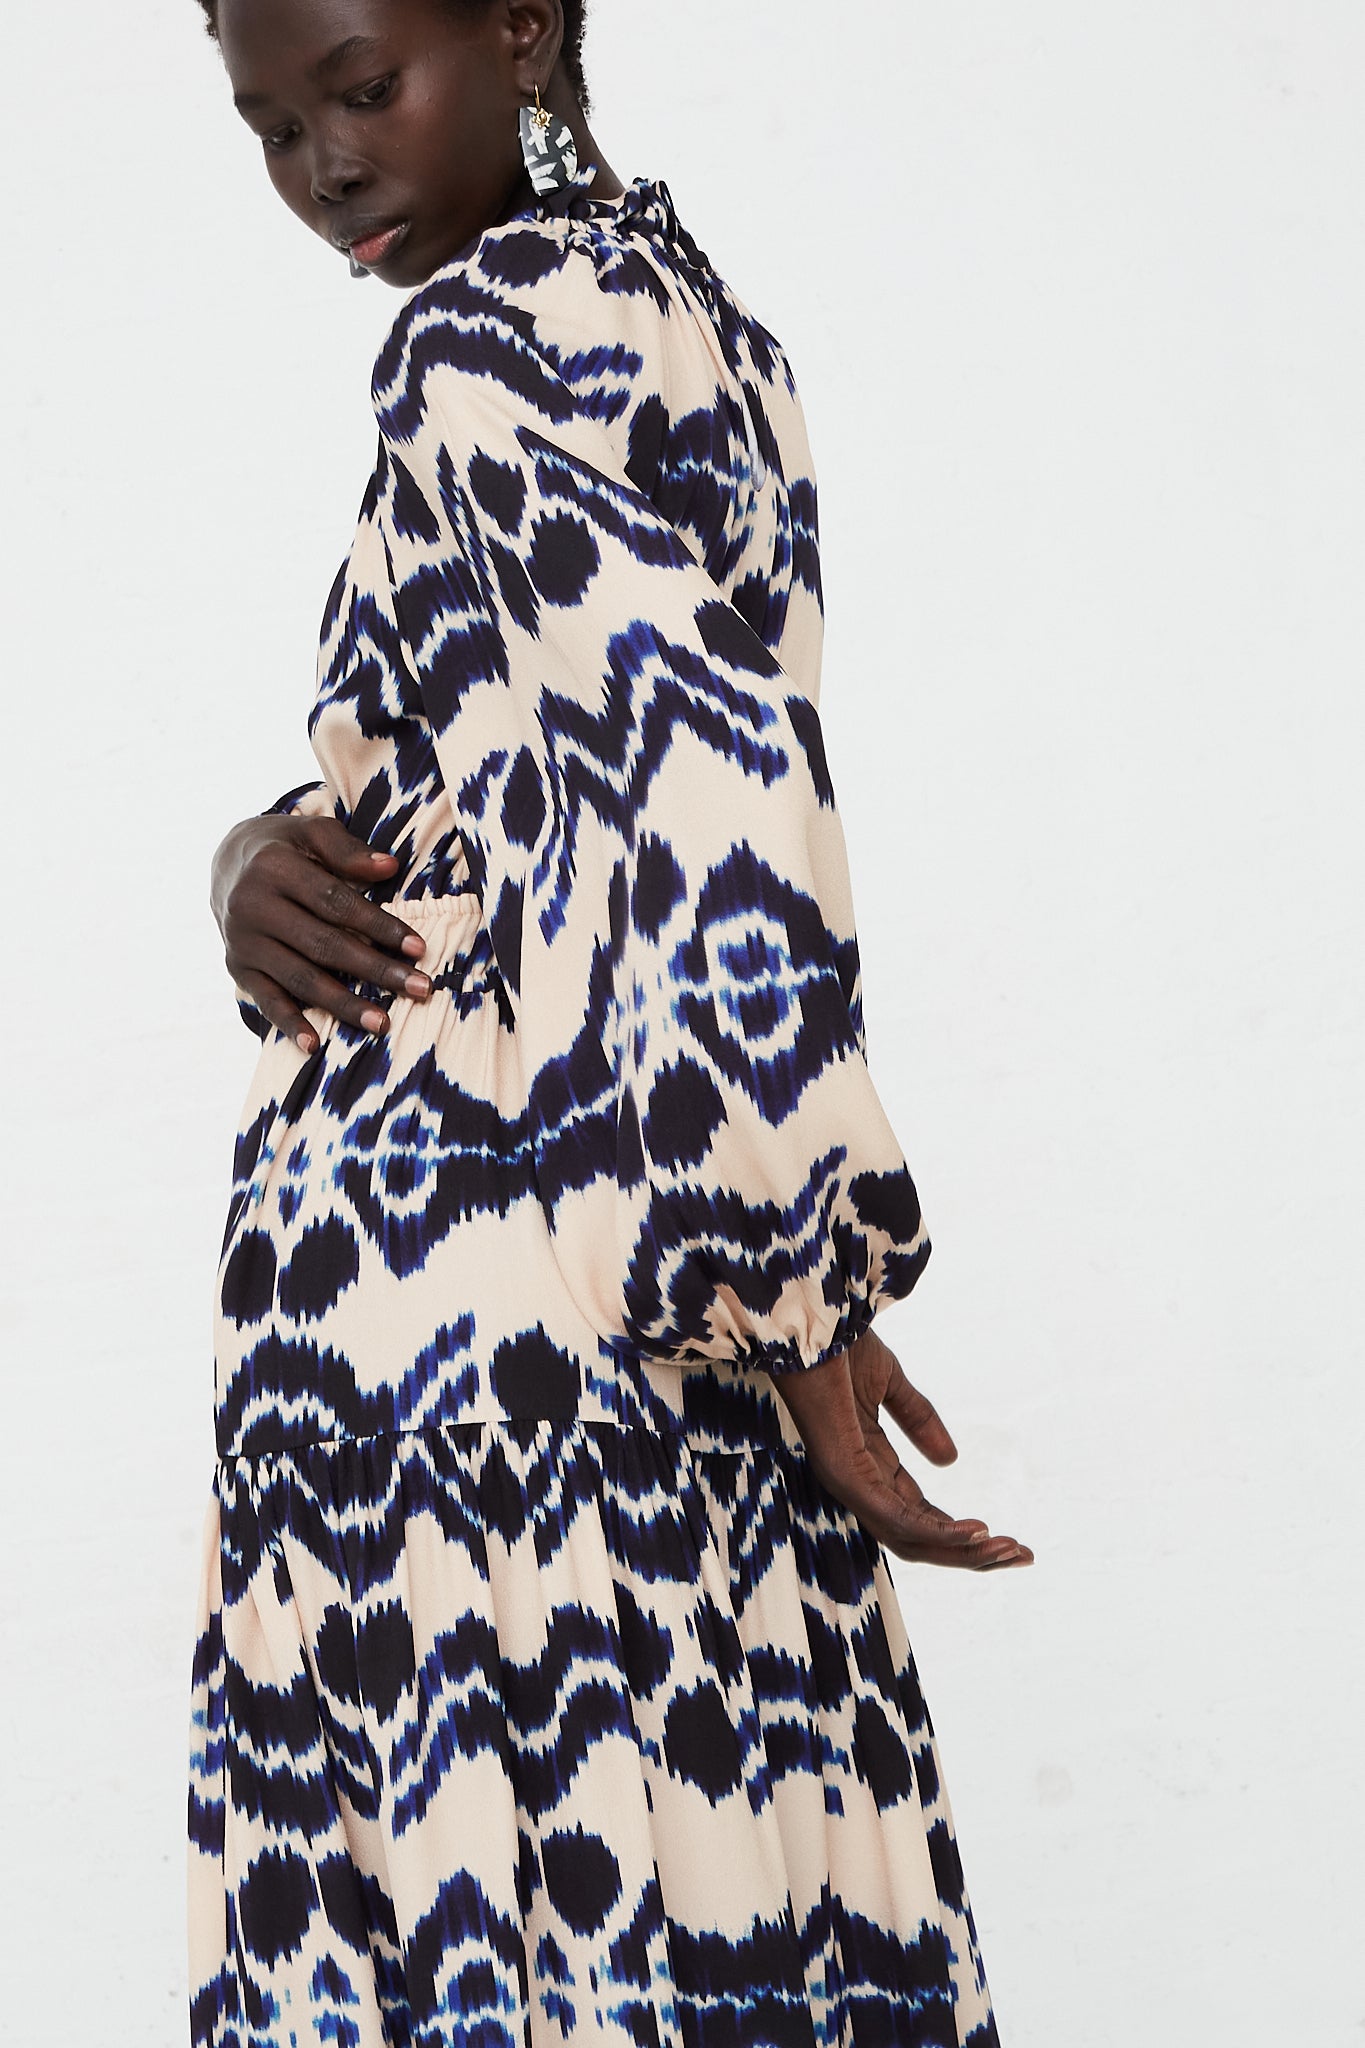 Annalisa Satin Dress in Nimbus by Ulla Johnson for Oroboro Side